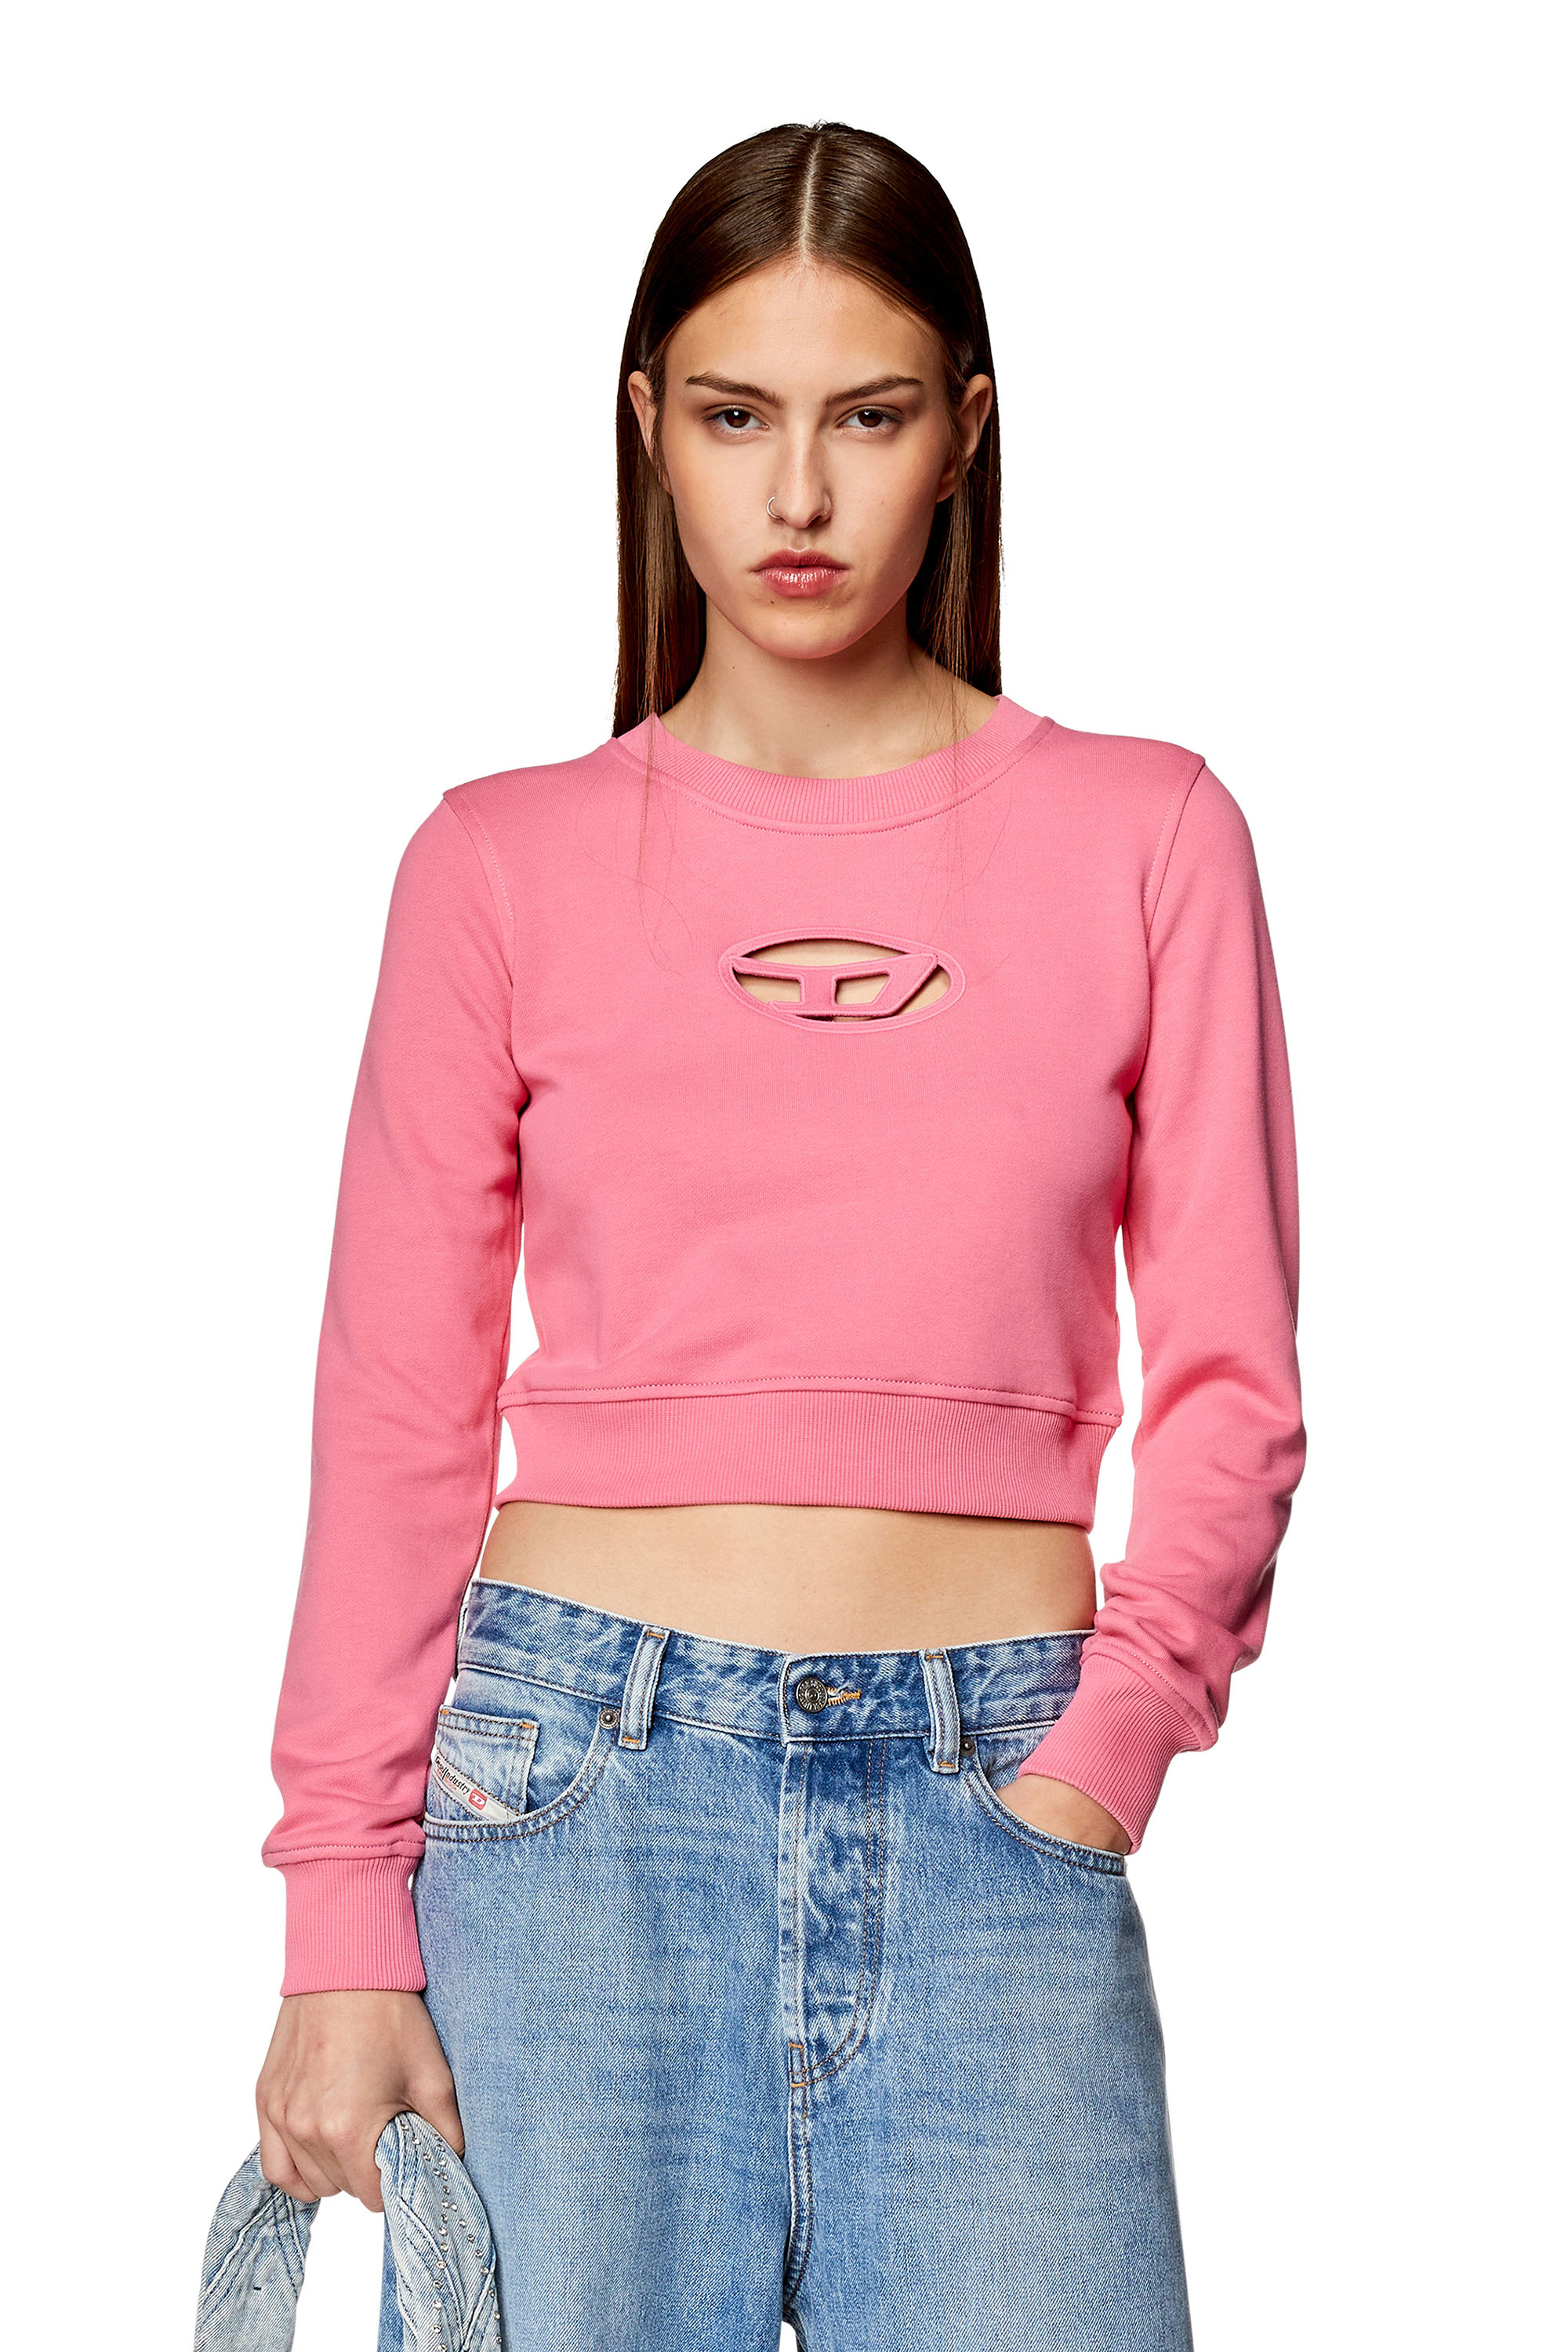 Diesel - Sweat-shirt cropped avec logo cut-out - Pull Cotton - Femme - Rose